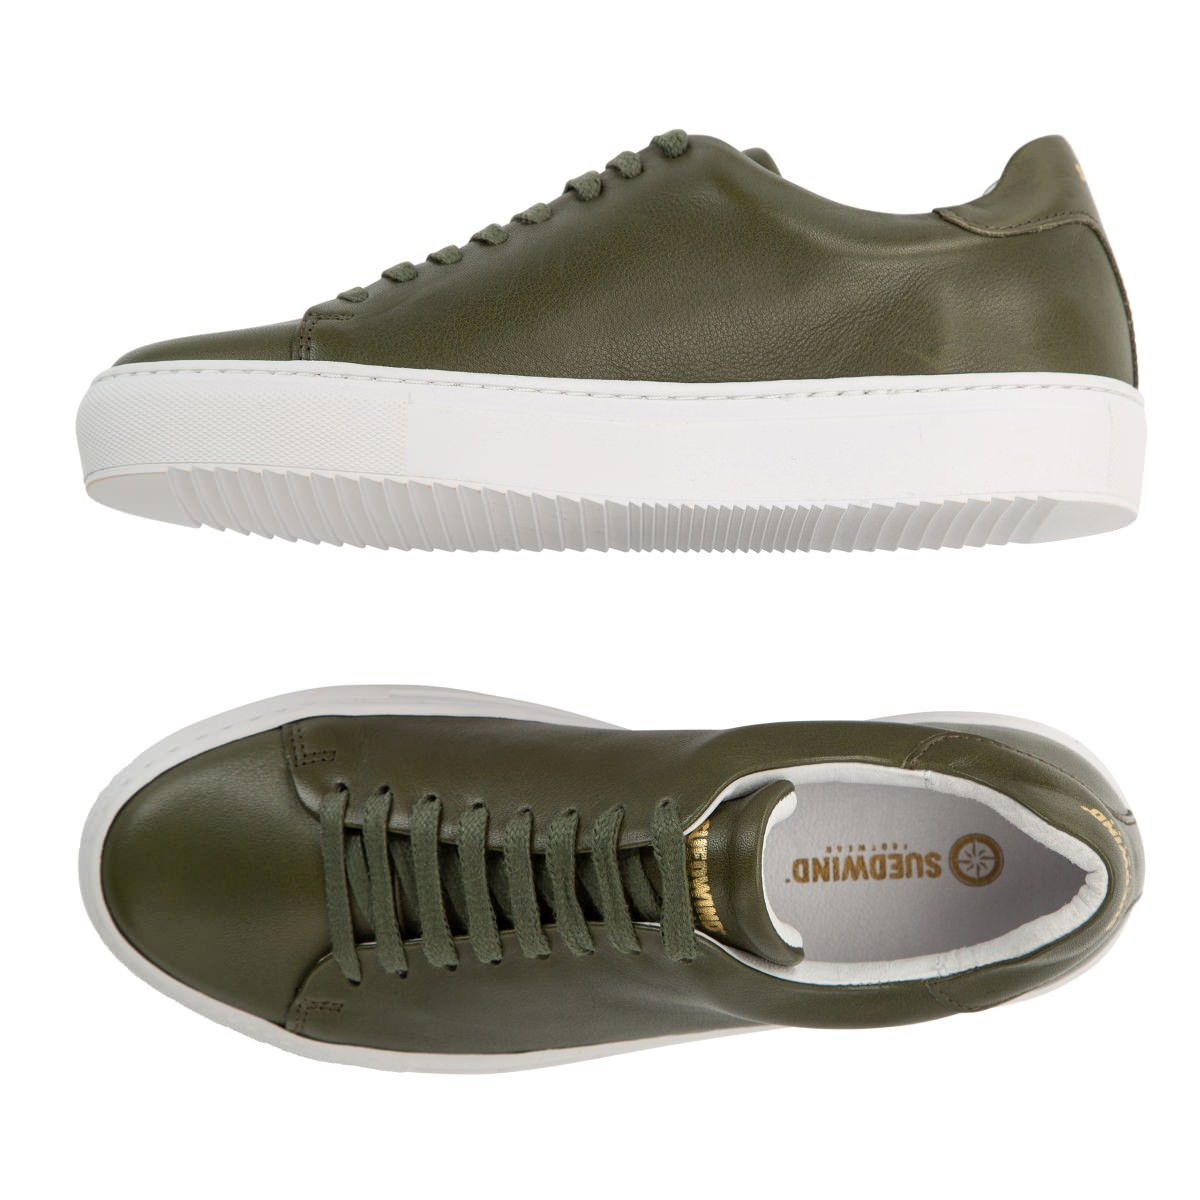 Suedwind-Ashton-Leather-Leder-Sneaker-Schuhe-Boots-Green-Gruen-10170028-02_1280x1280